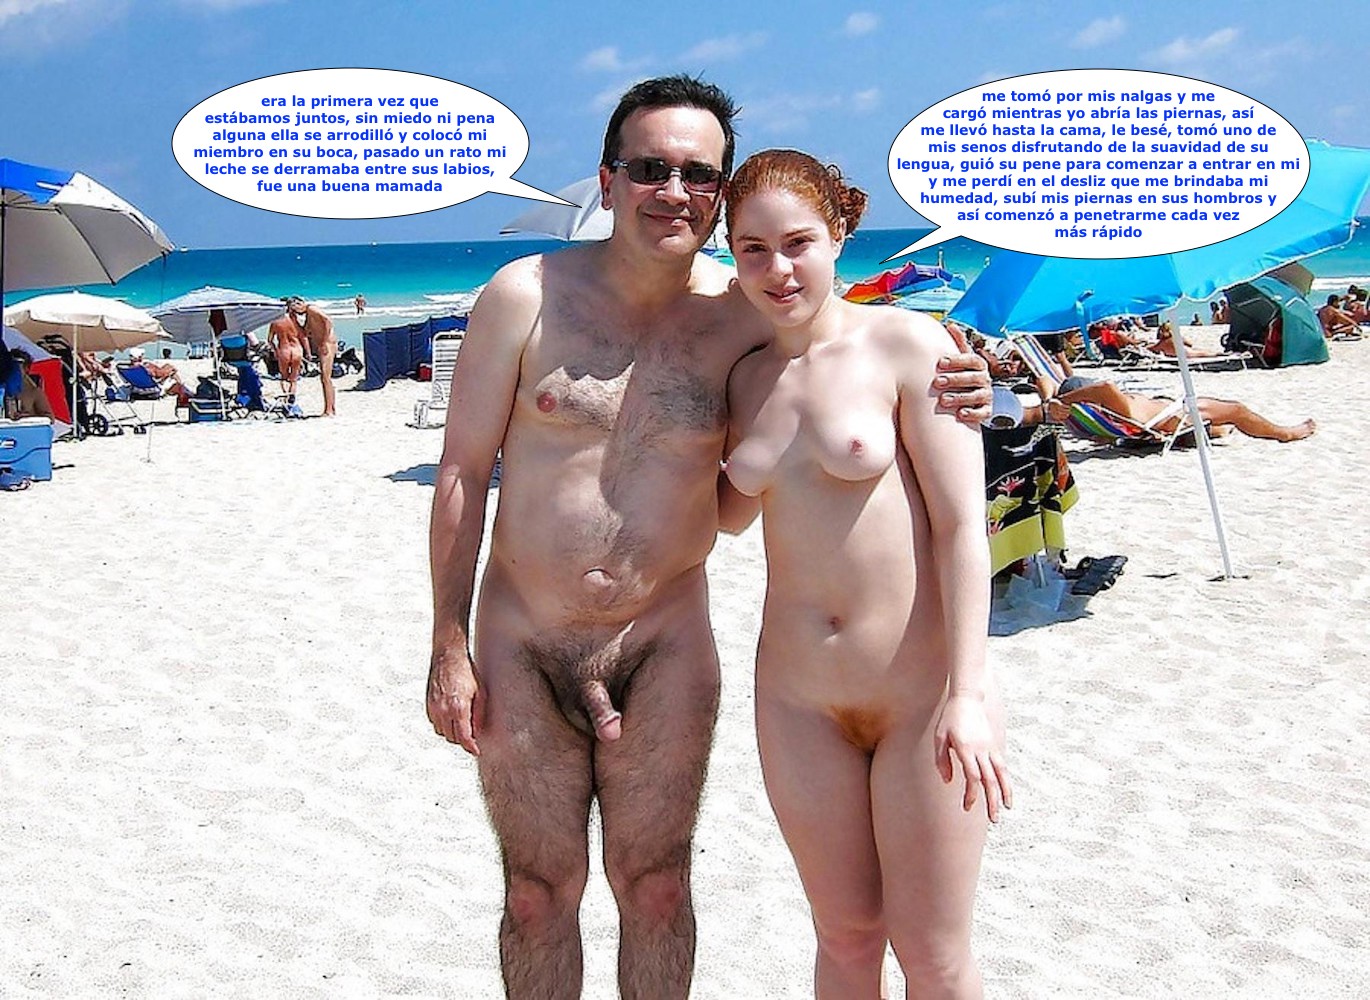 Slideshow family vacation nudity.